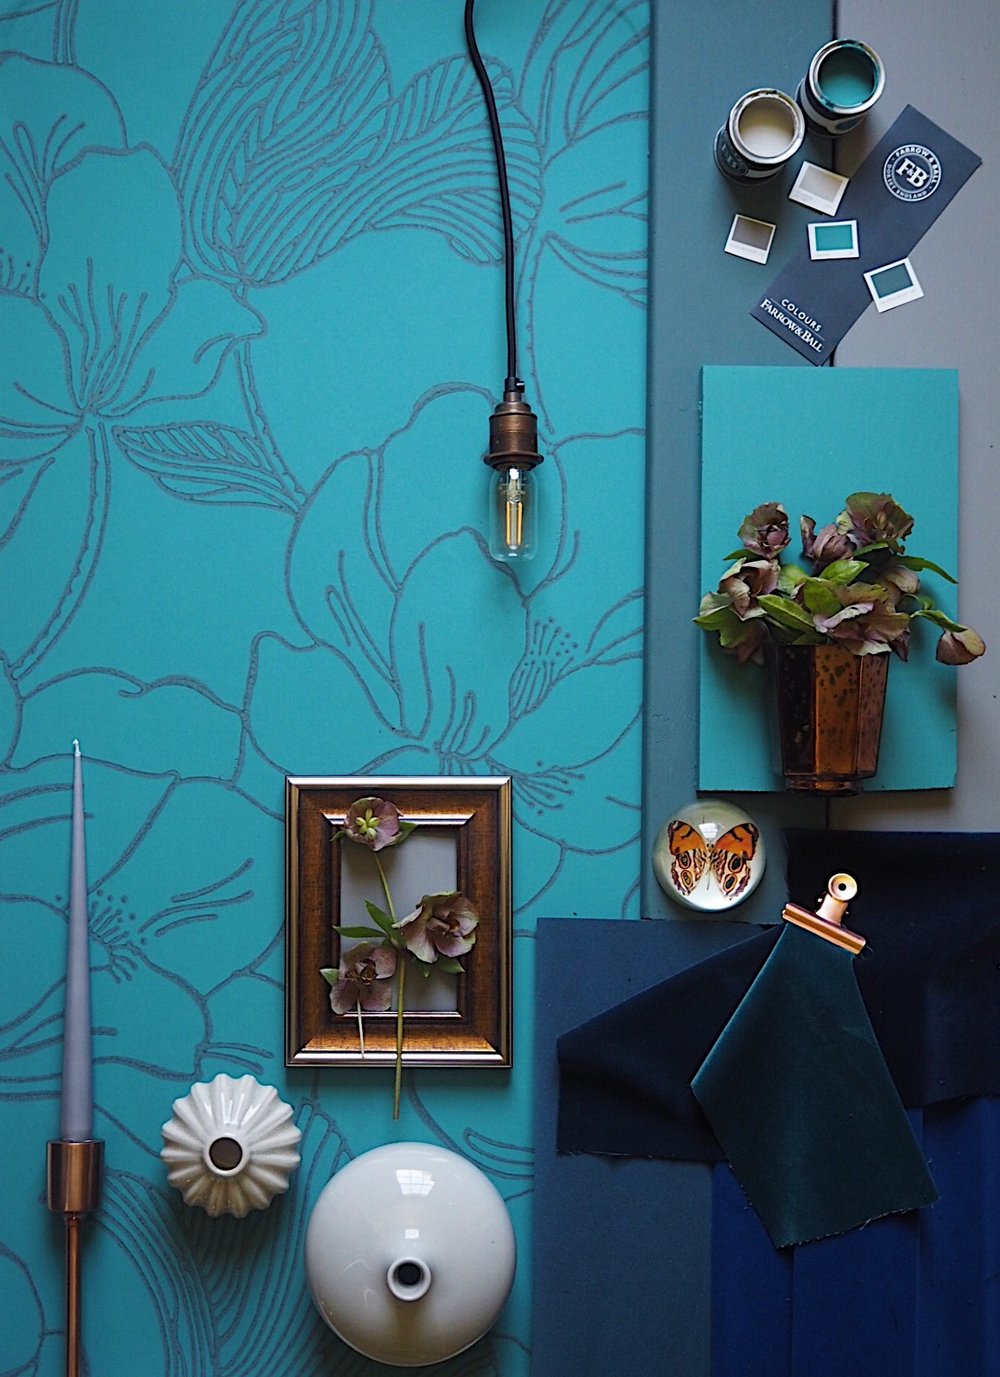 new wallpaper,blue,turquoise,green,teal,aqua